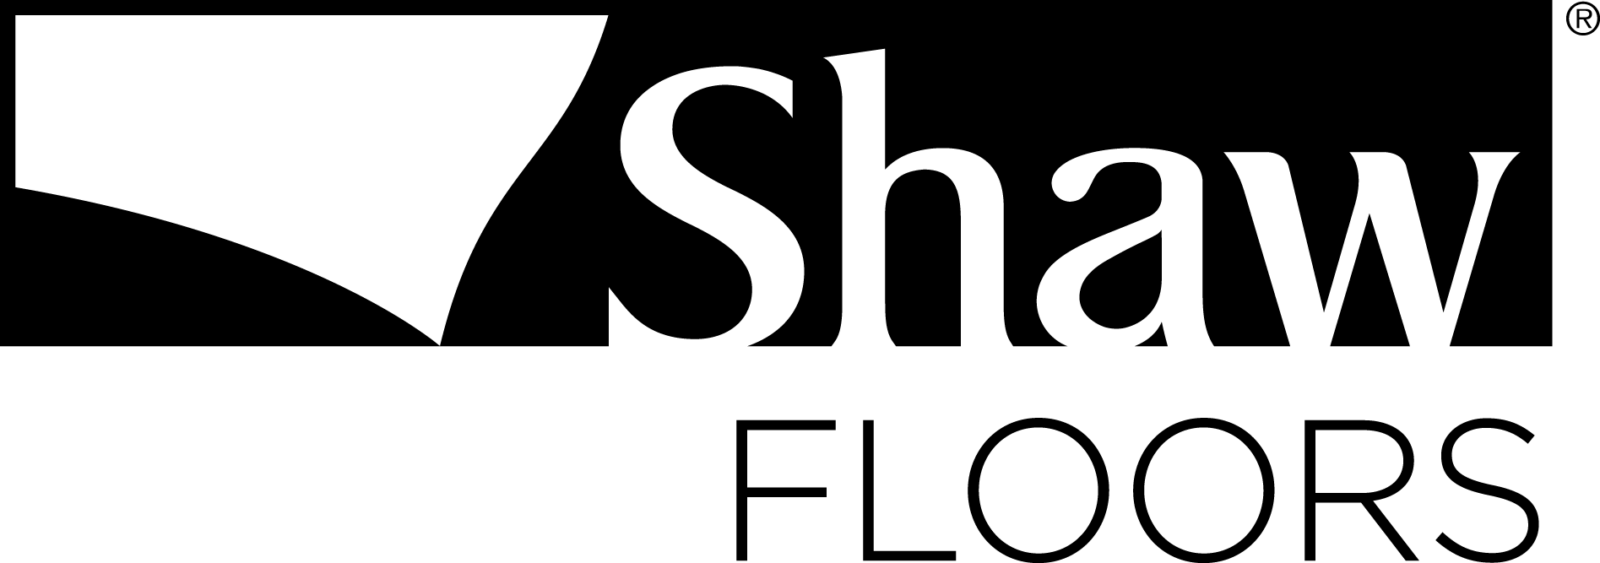 Shaw Floors Logo_black